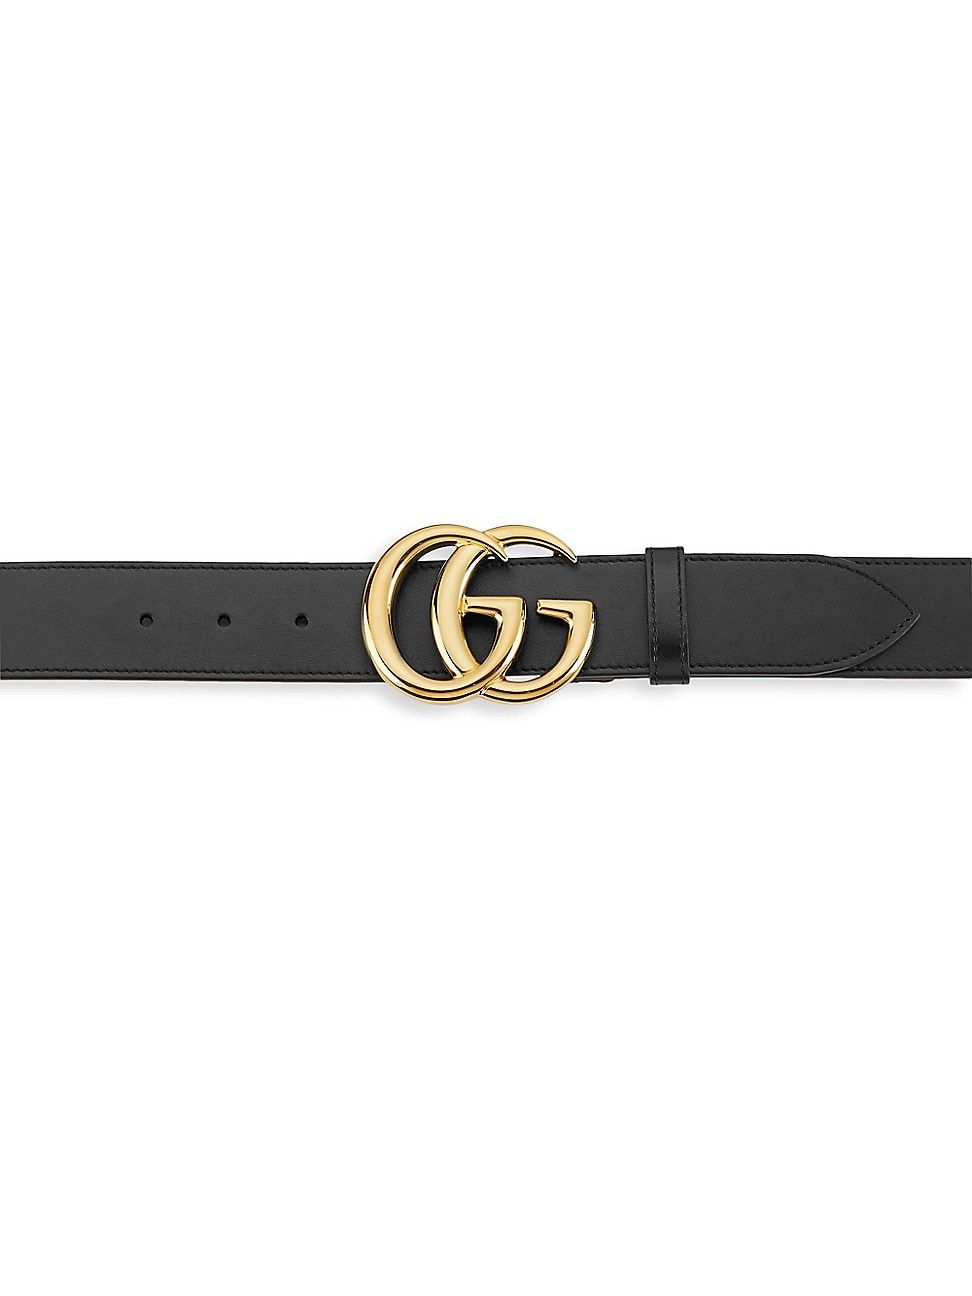 Gucci Men's New Marmont Leather Belt - Black - Size 40 | Saks Fifth Avenue